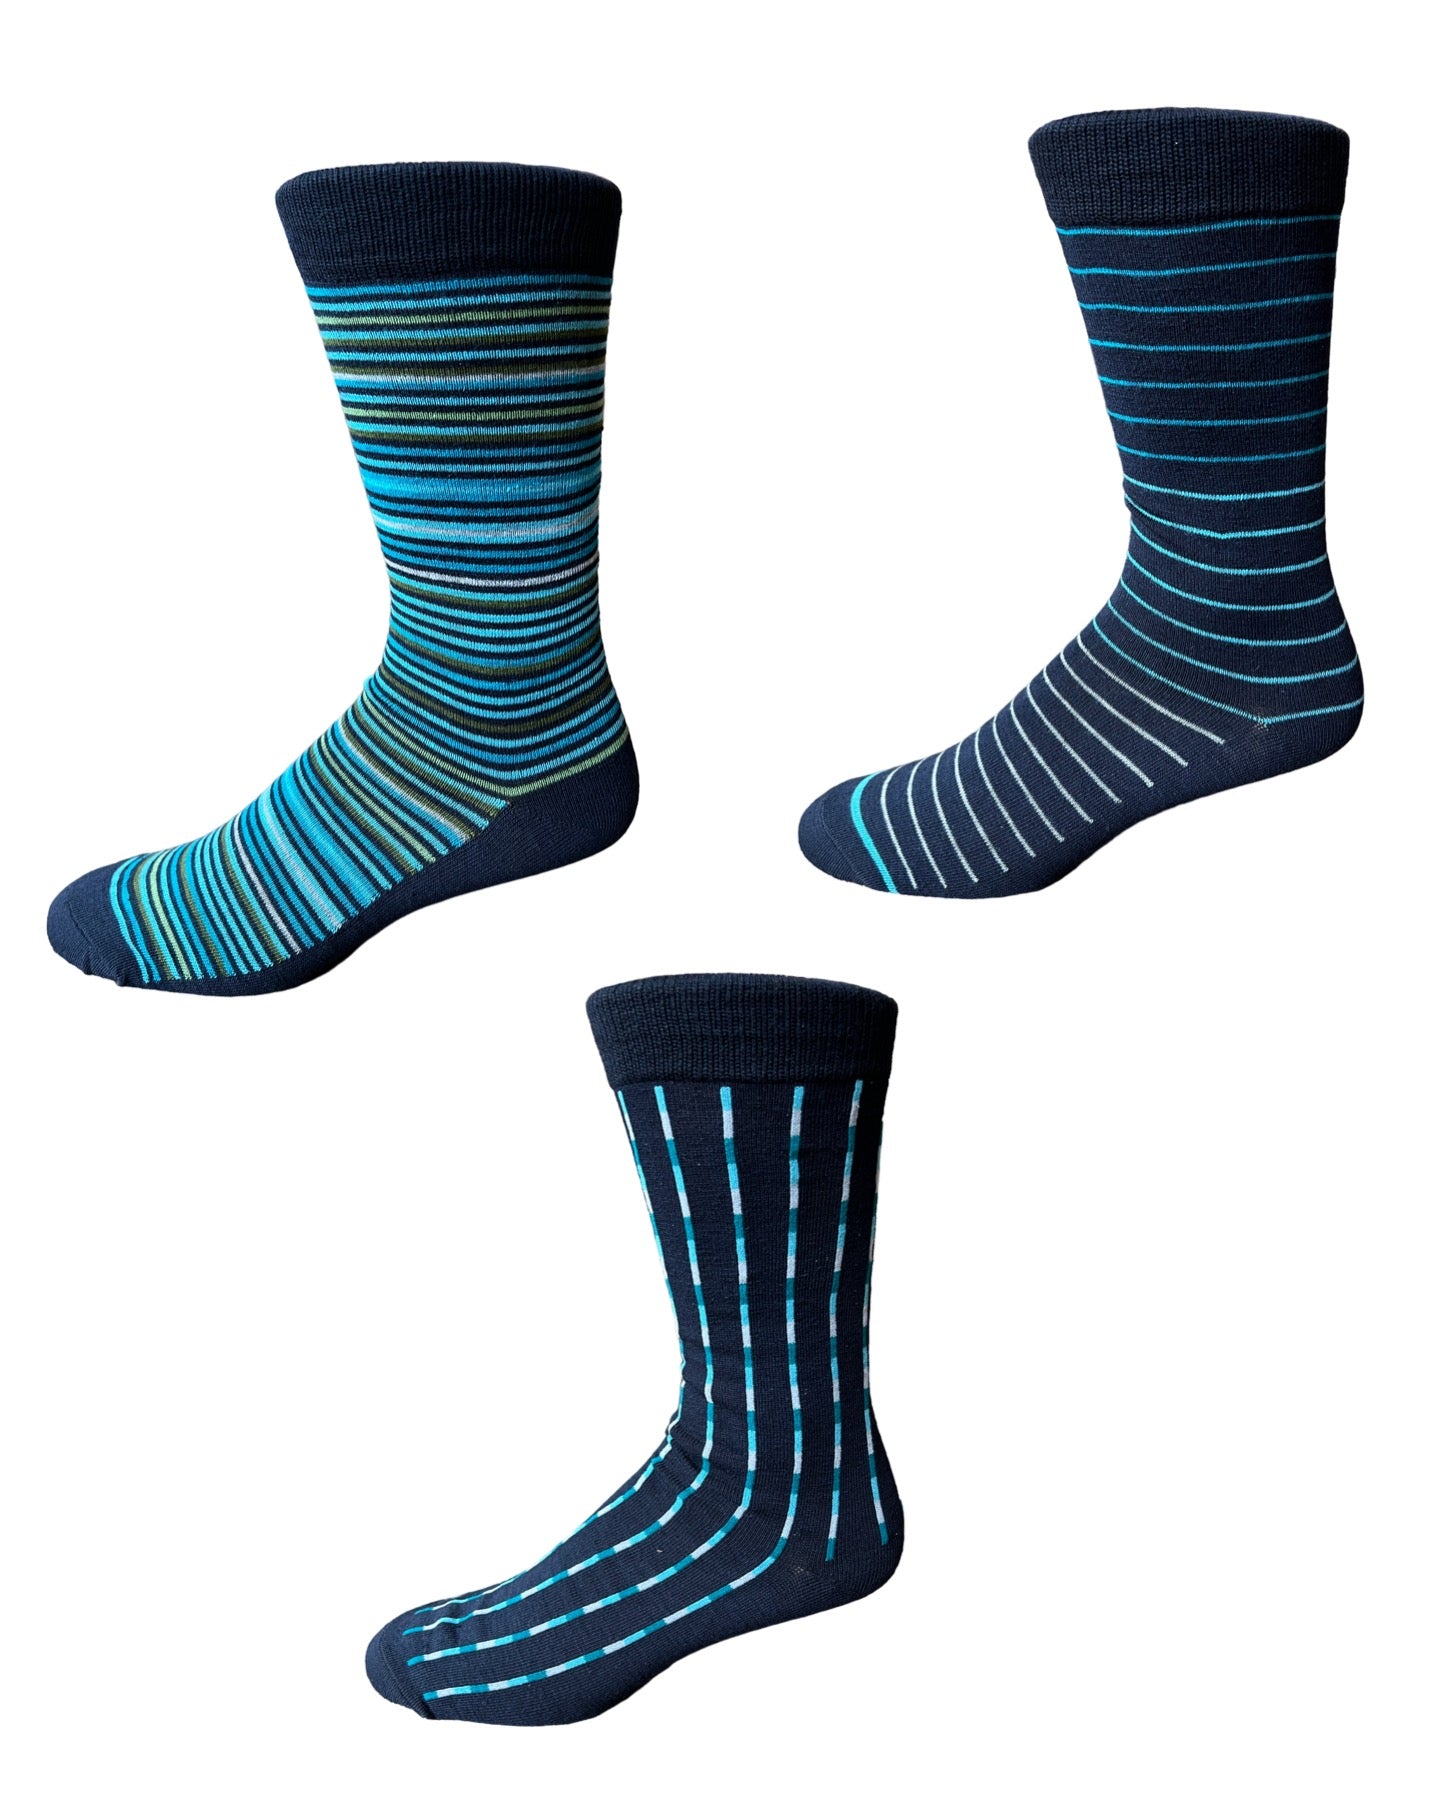 Stripes Assortment Fashion Socks in Navy 3pr Pack